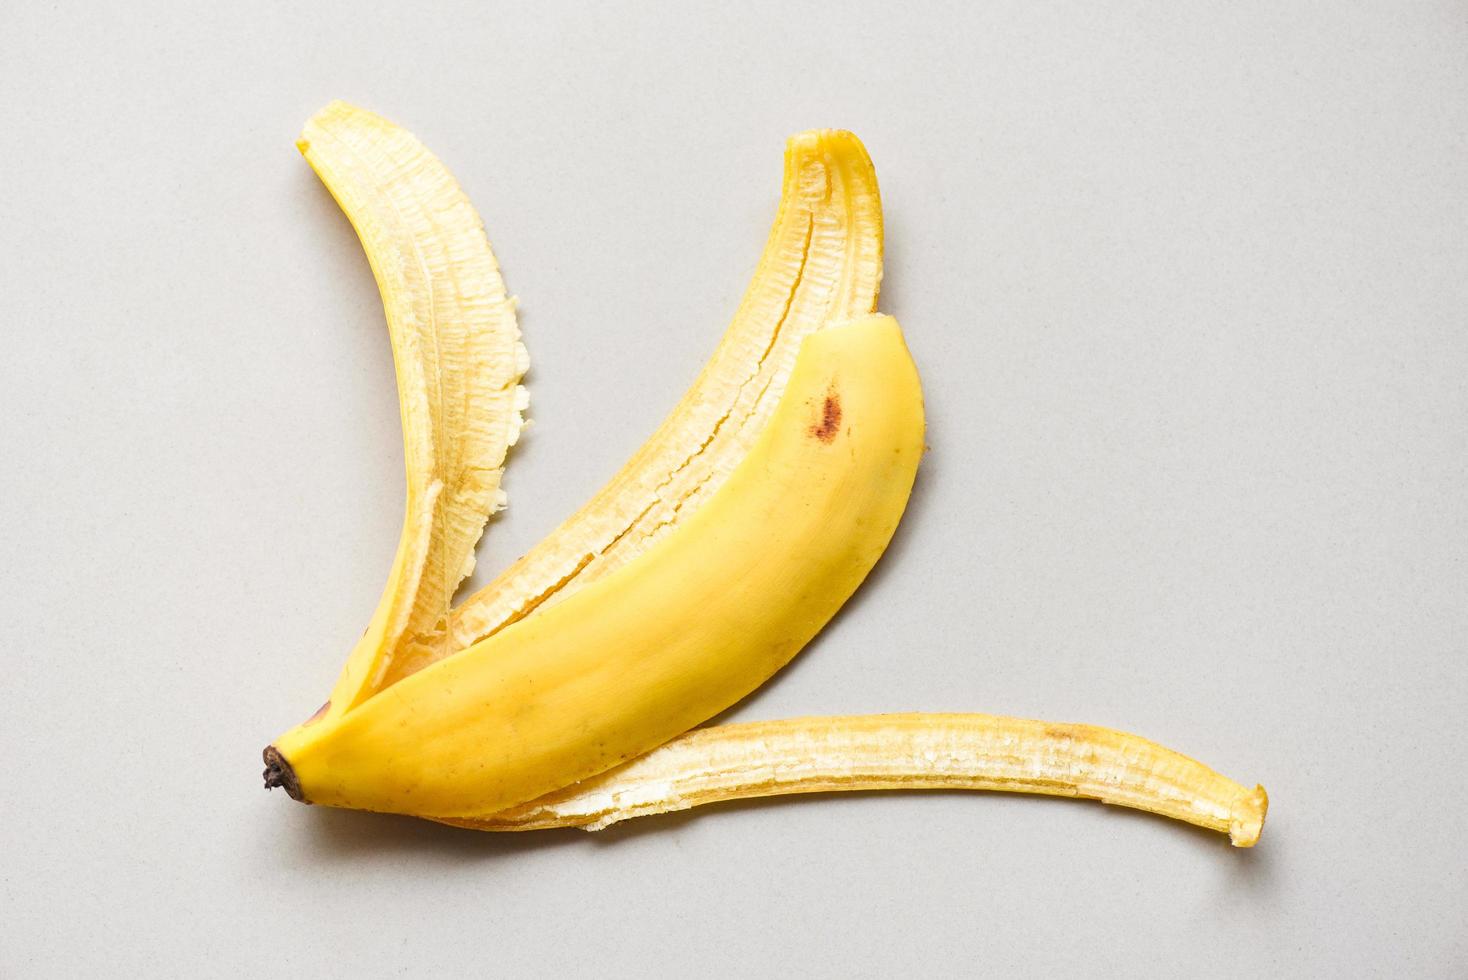 banana peel on grey background, Ripe banana peel on floor - top view photo